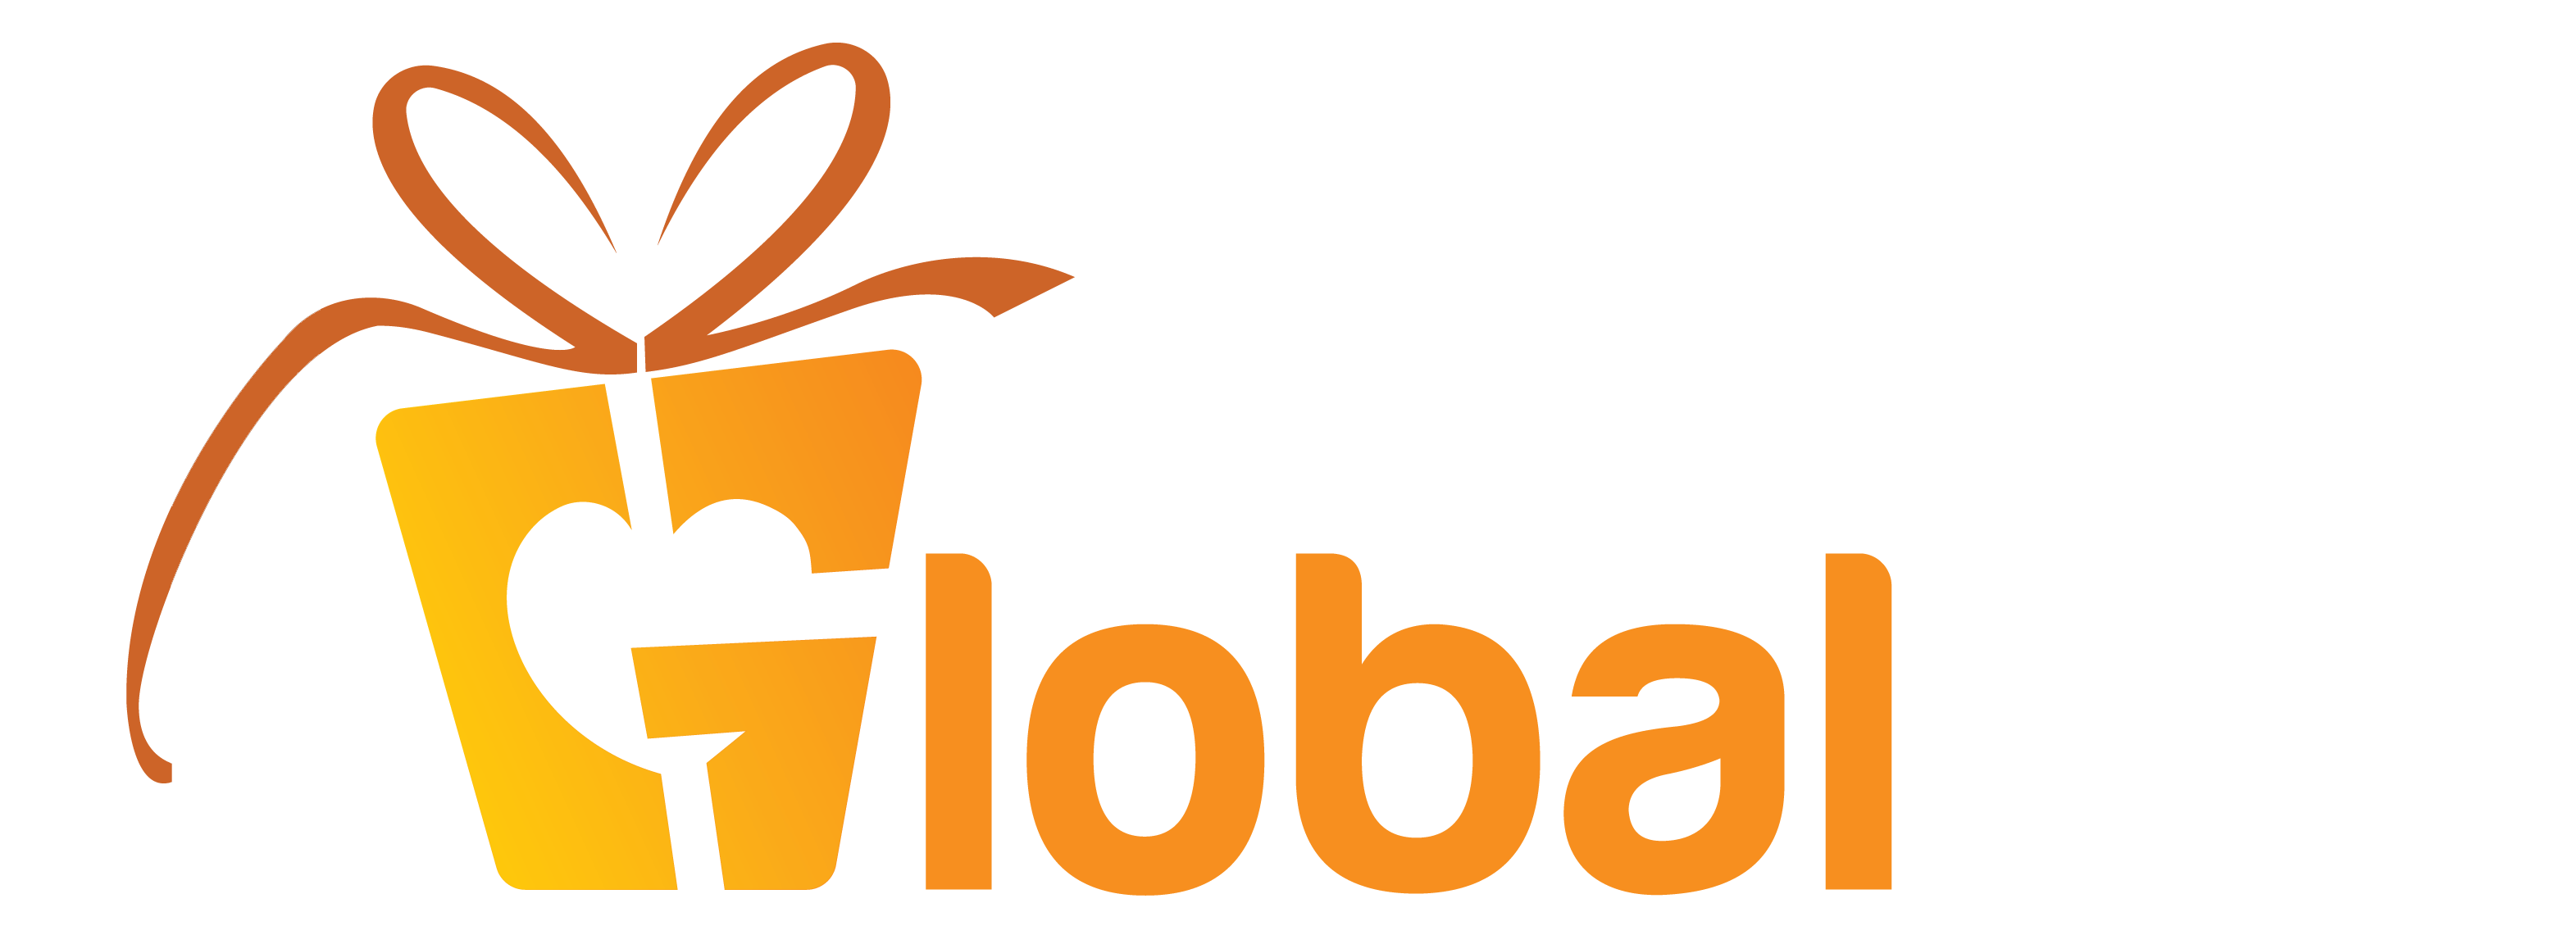 oneglobal-logo